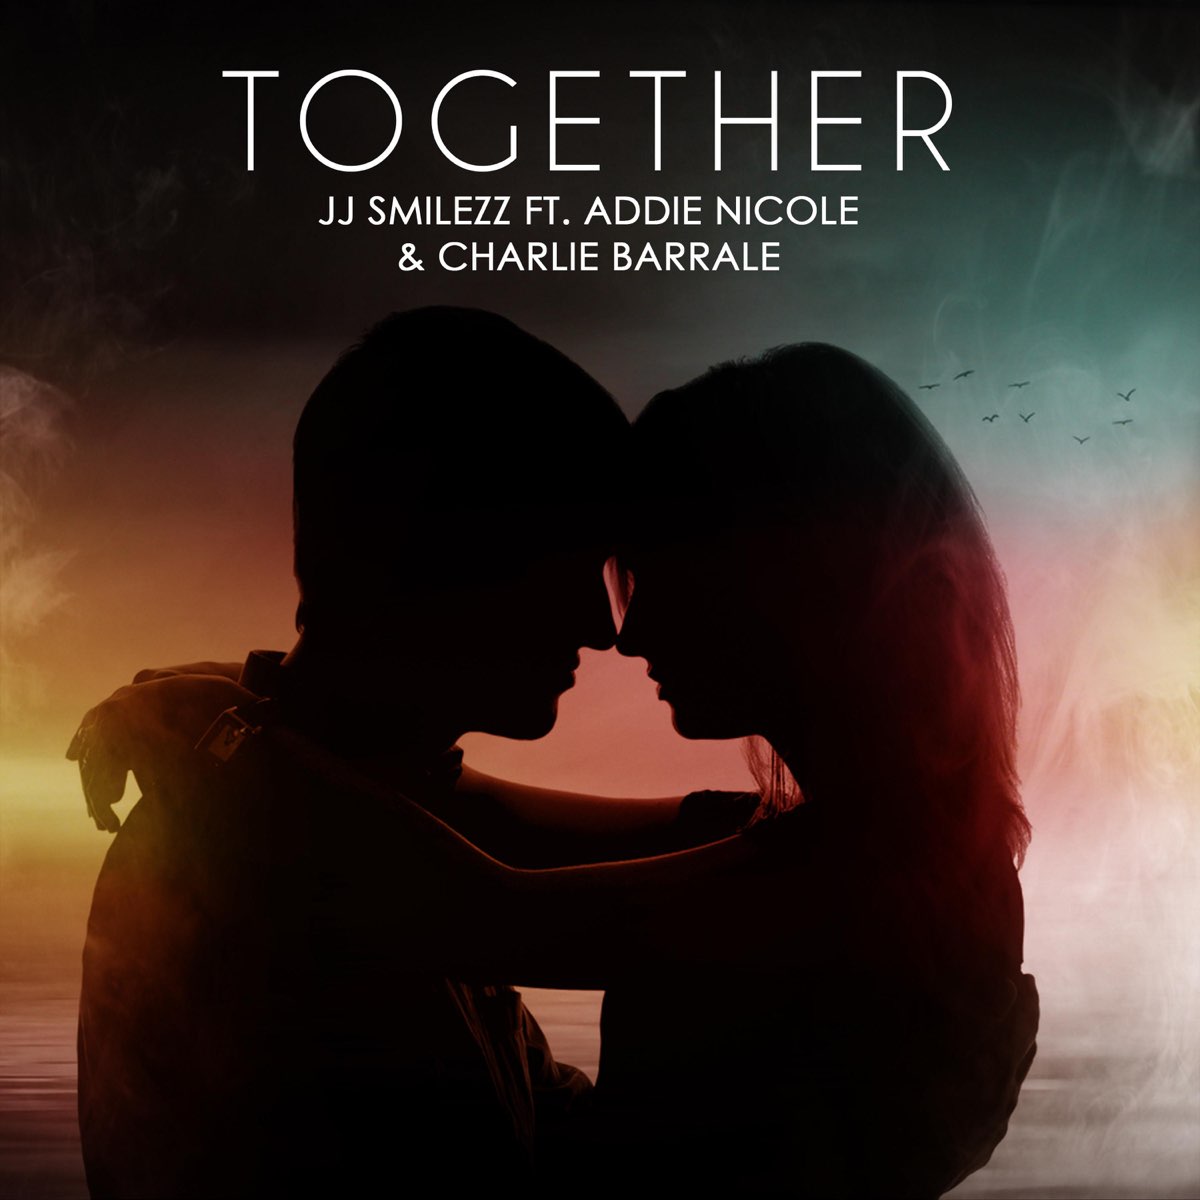 You and i together песня. Together песня. Nicole JJ). -Smilezz.